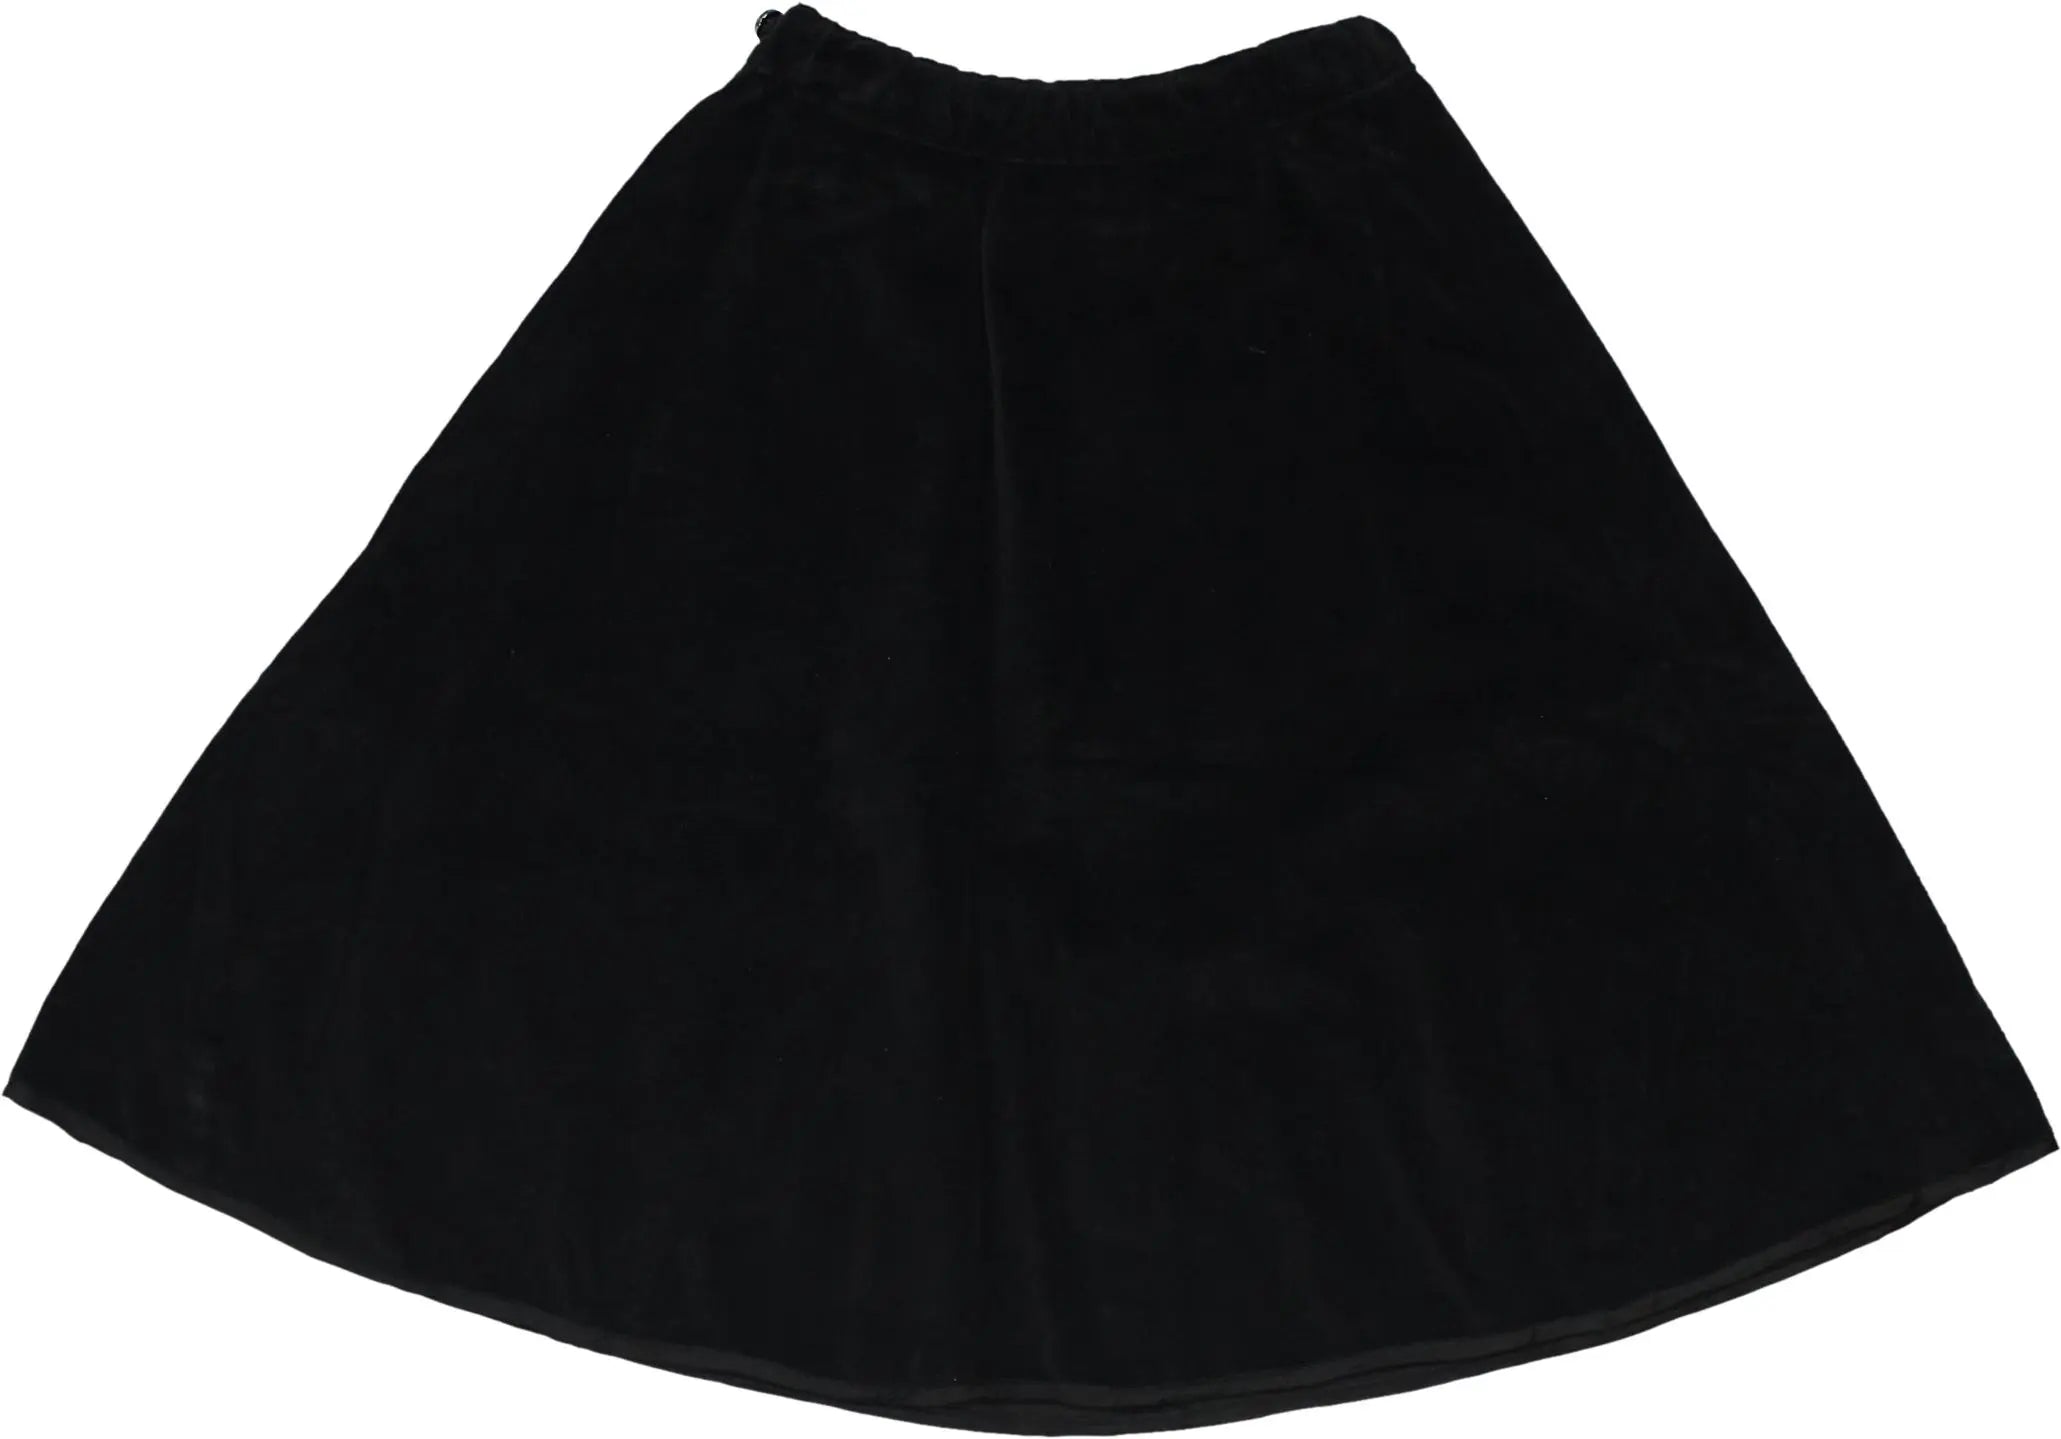 Unknown - Black Velvet Skirt- ThriftTale.com - Vintage and second handclothing